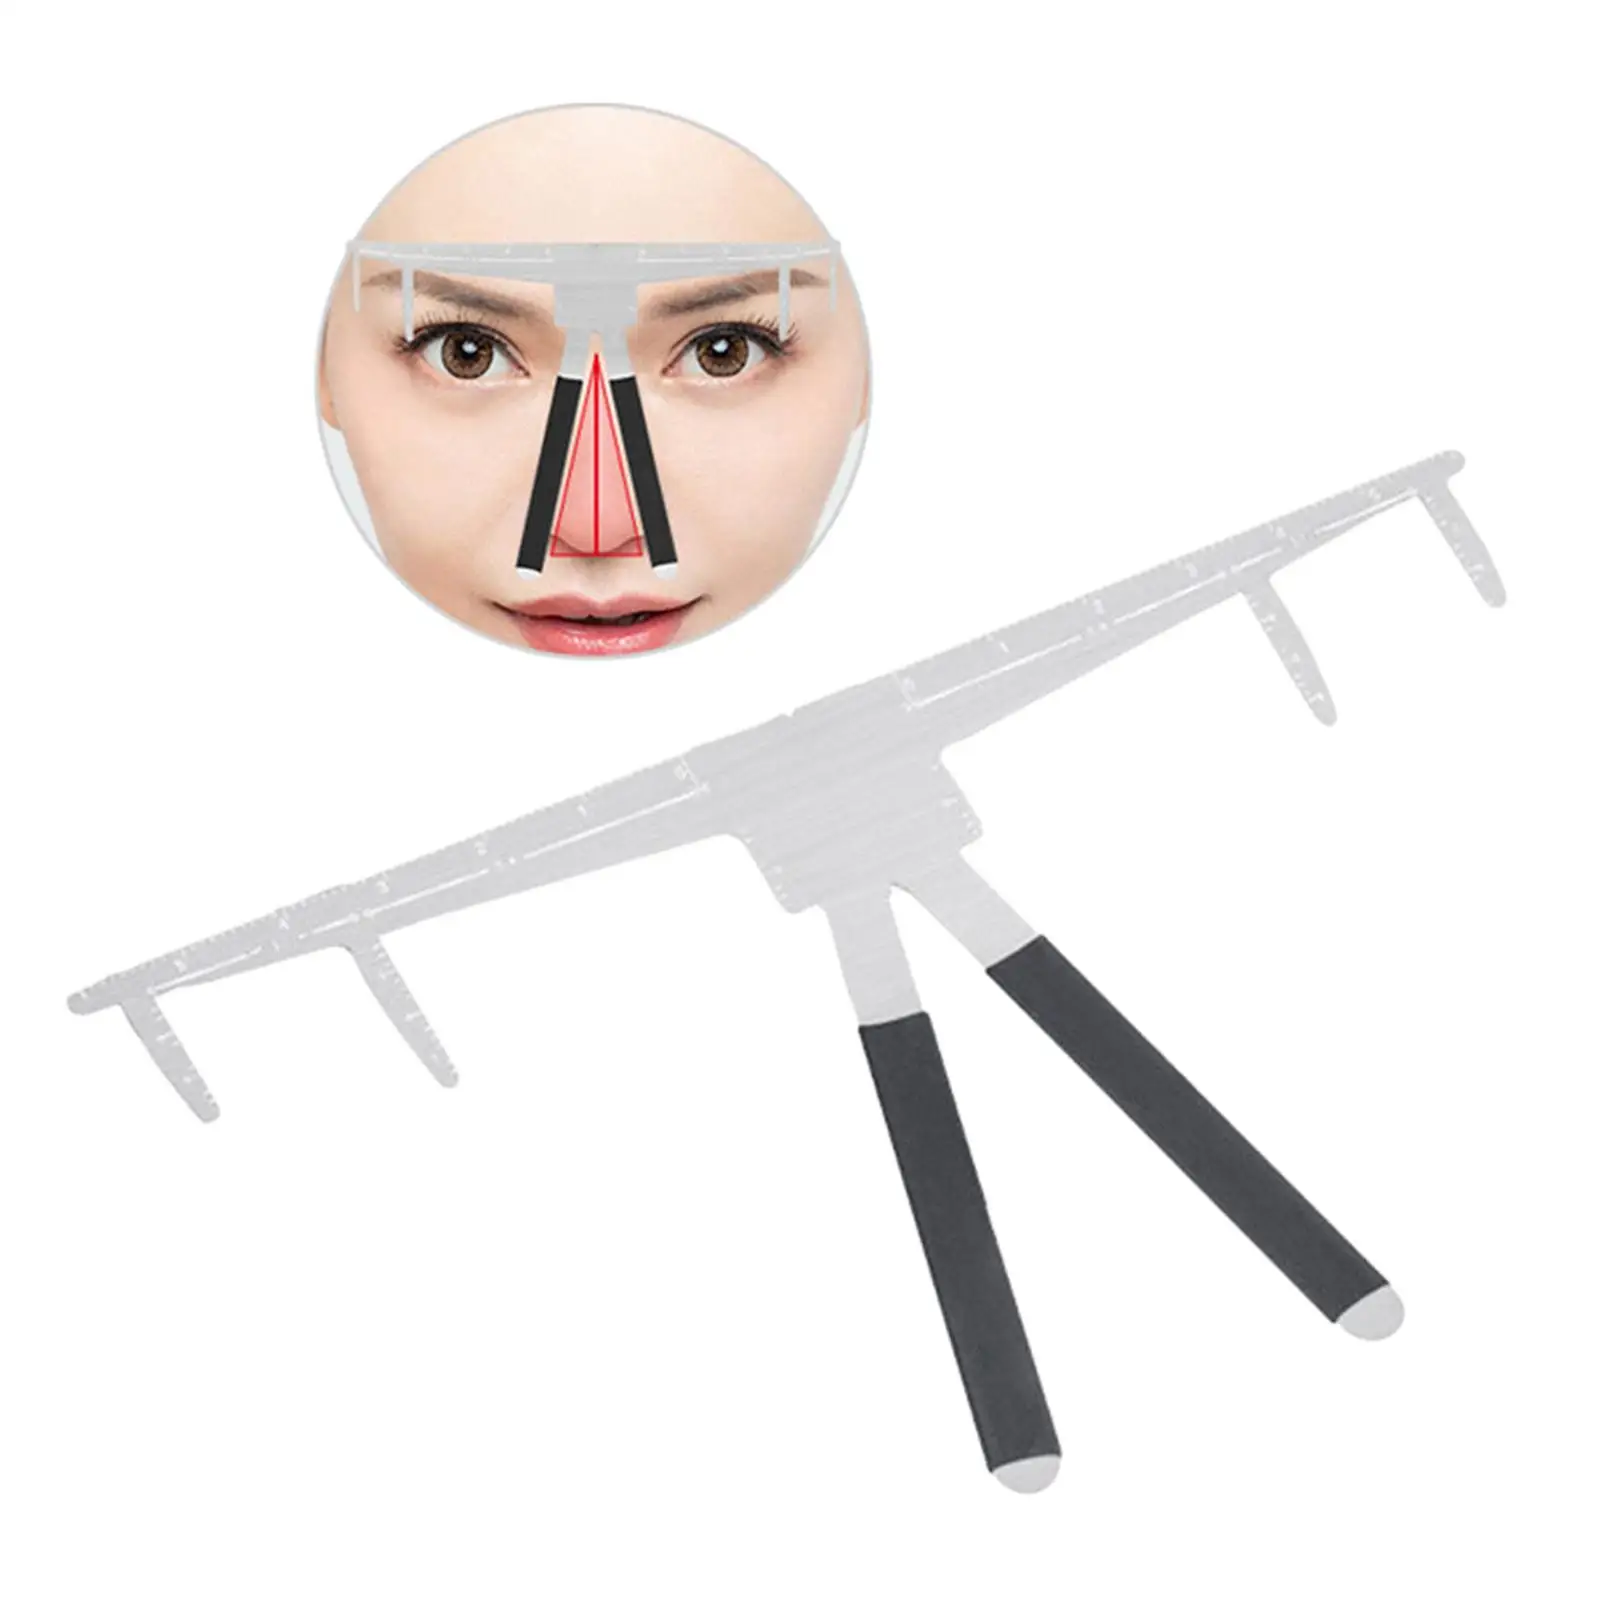 Steel Eyebrow Ruler Measure Ruler Tool for Eyebrow Measuring Shaping